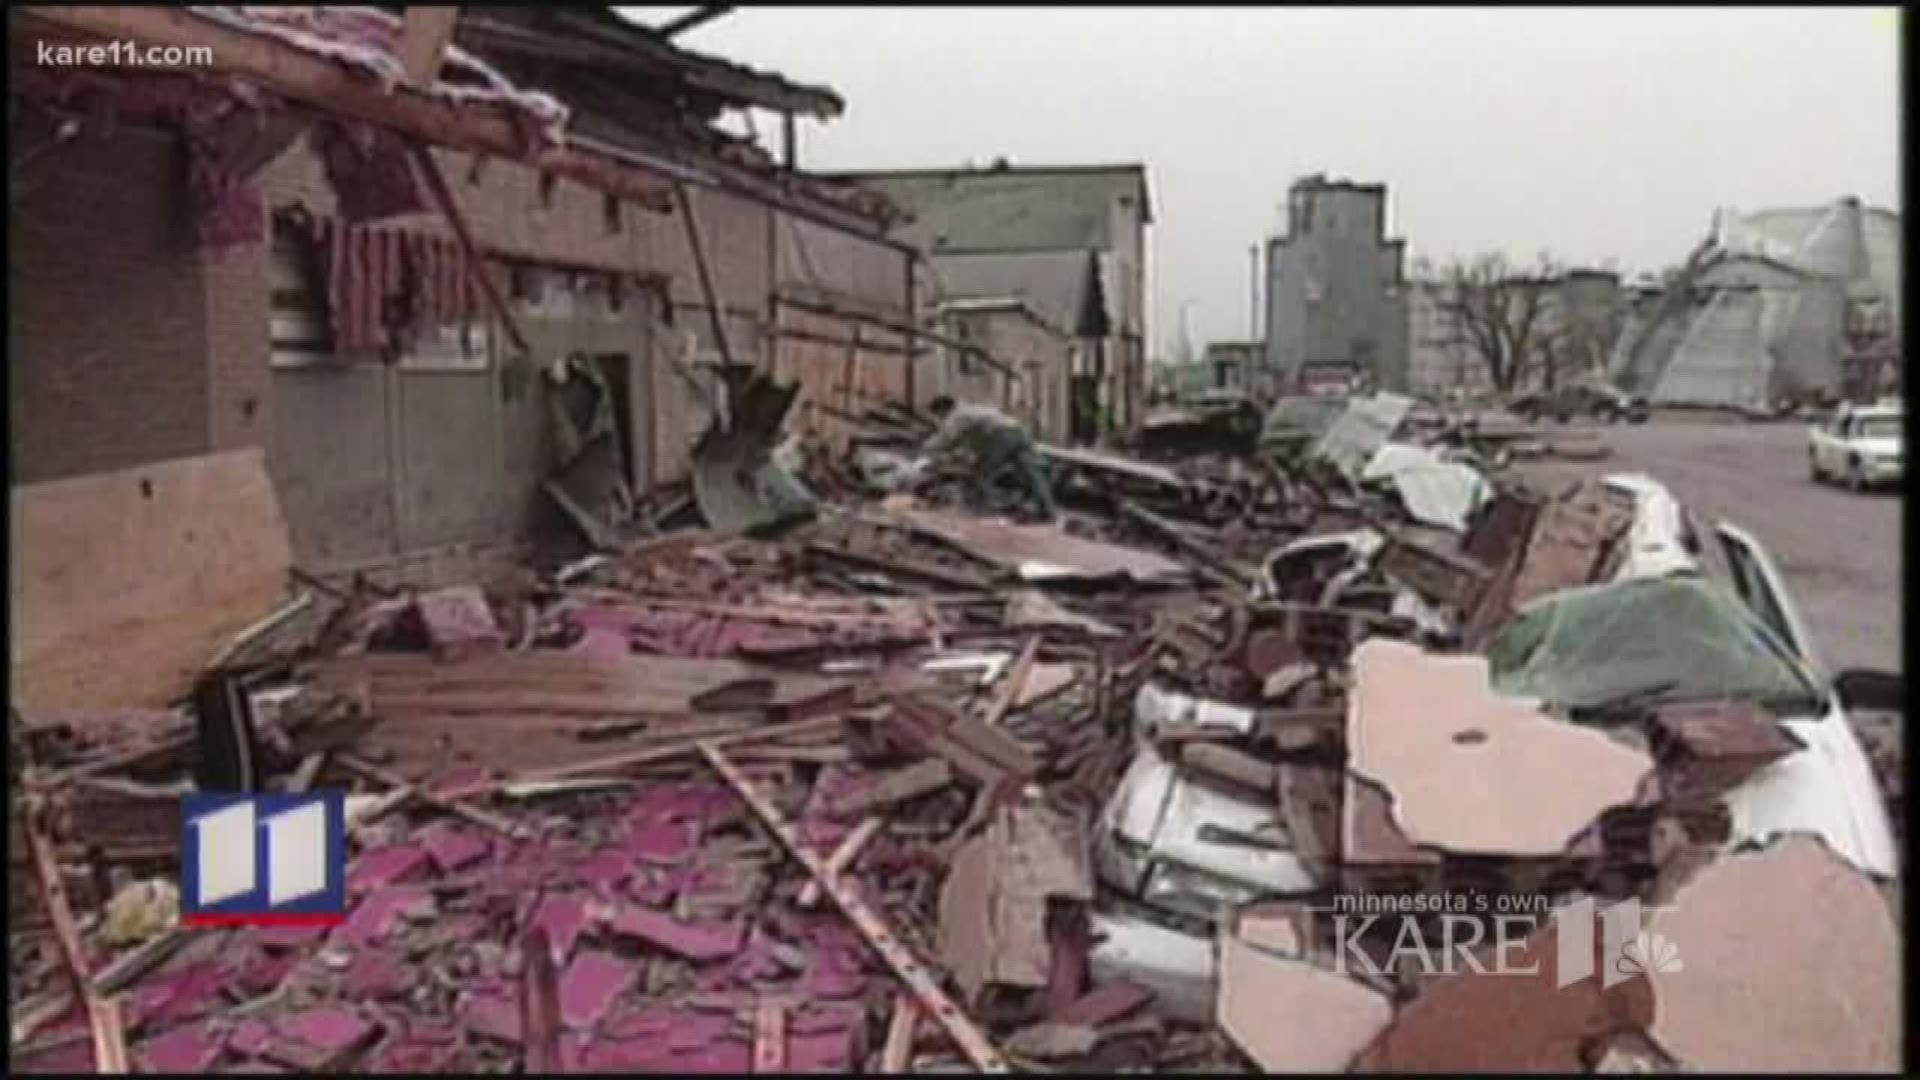 20 years since St. Peter tornado